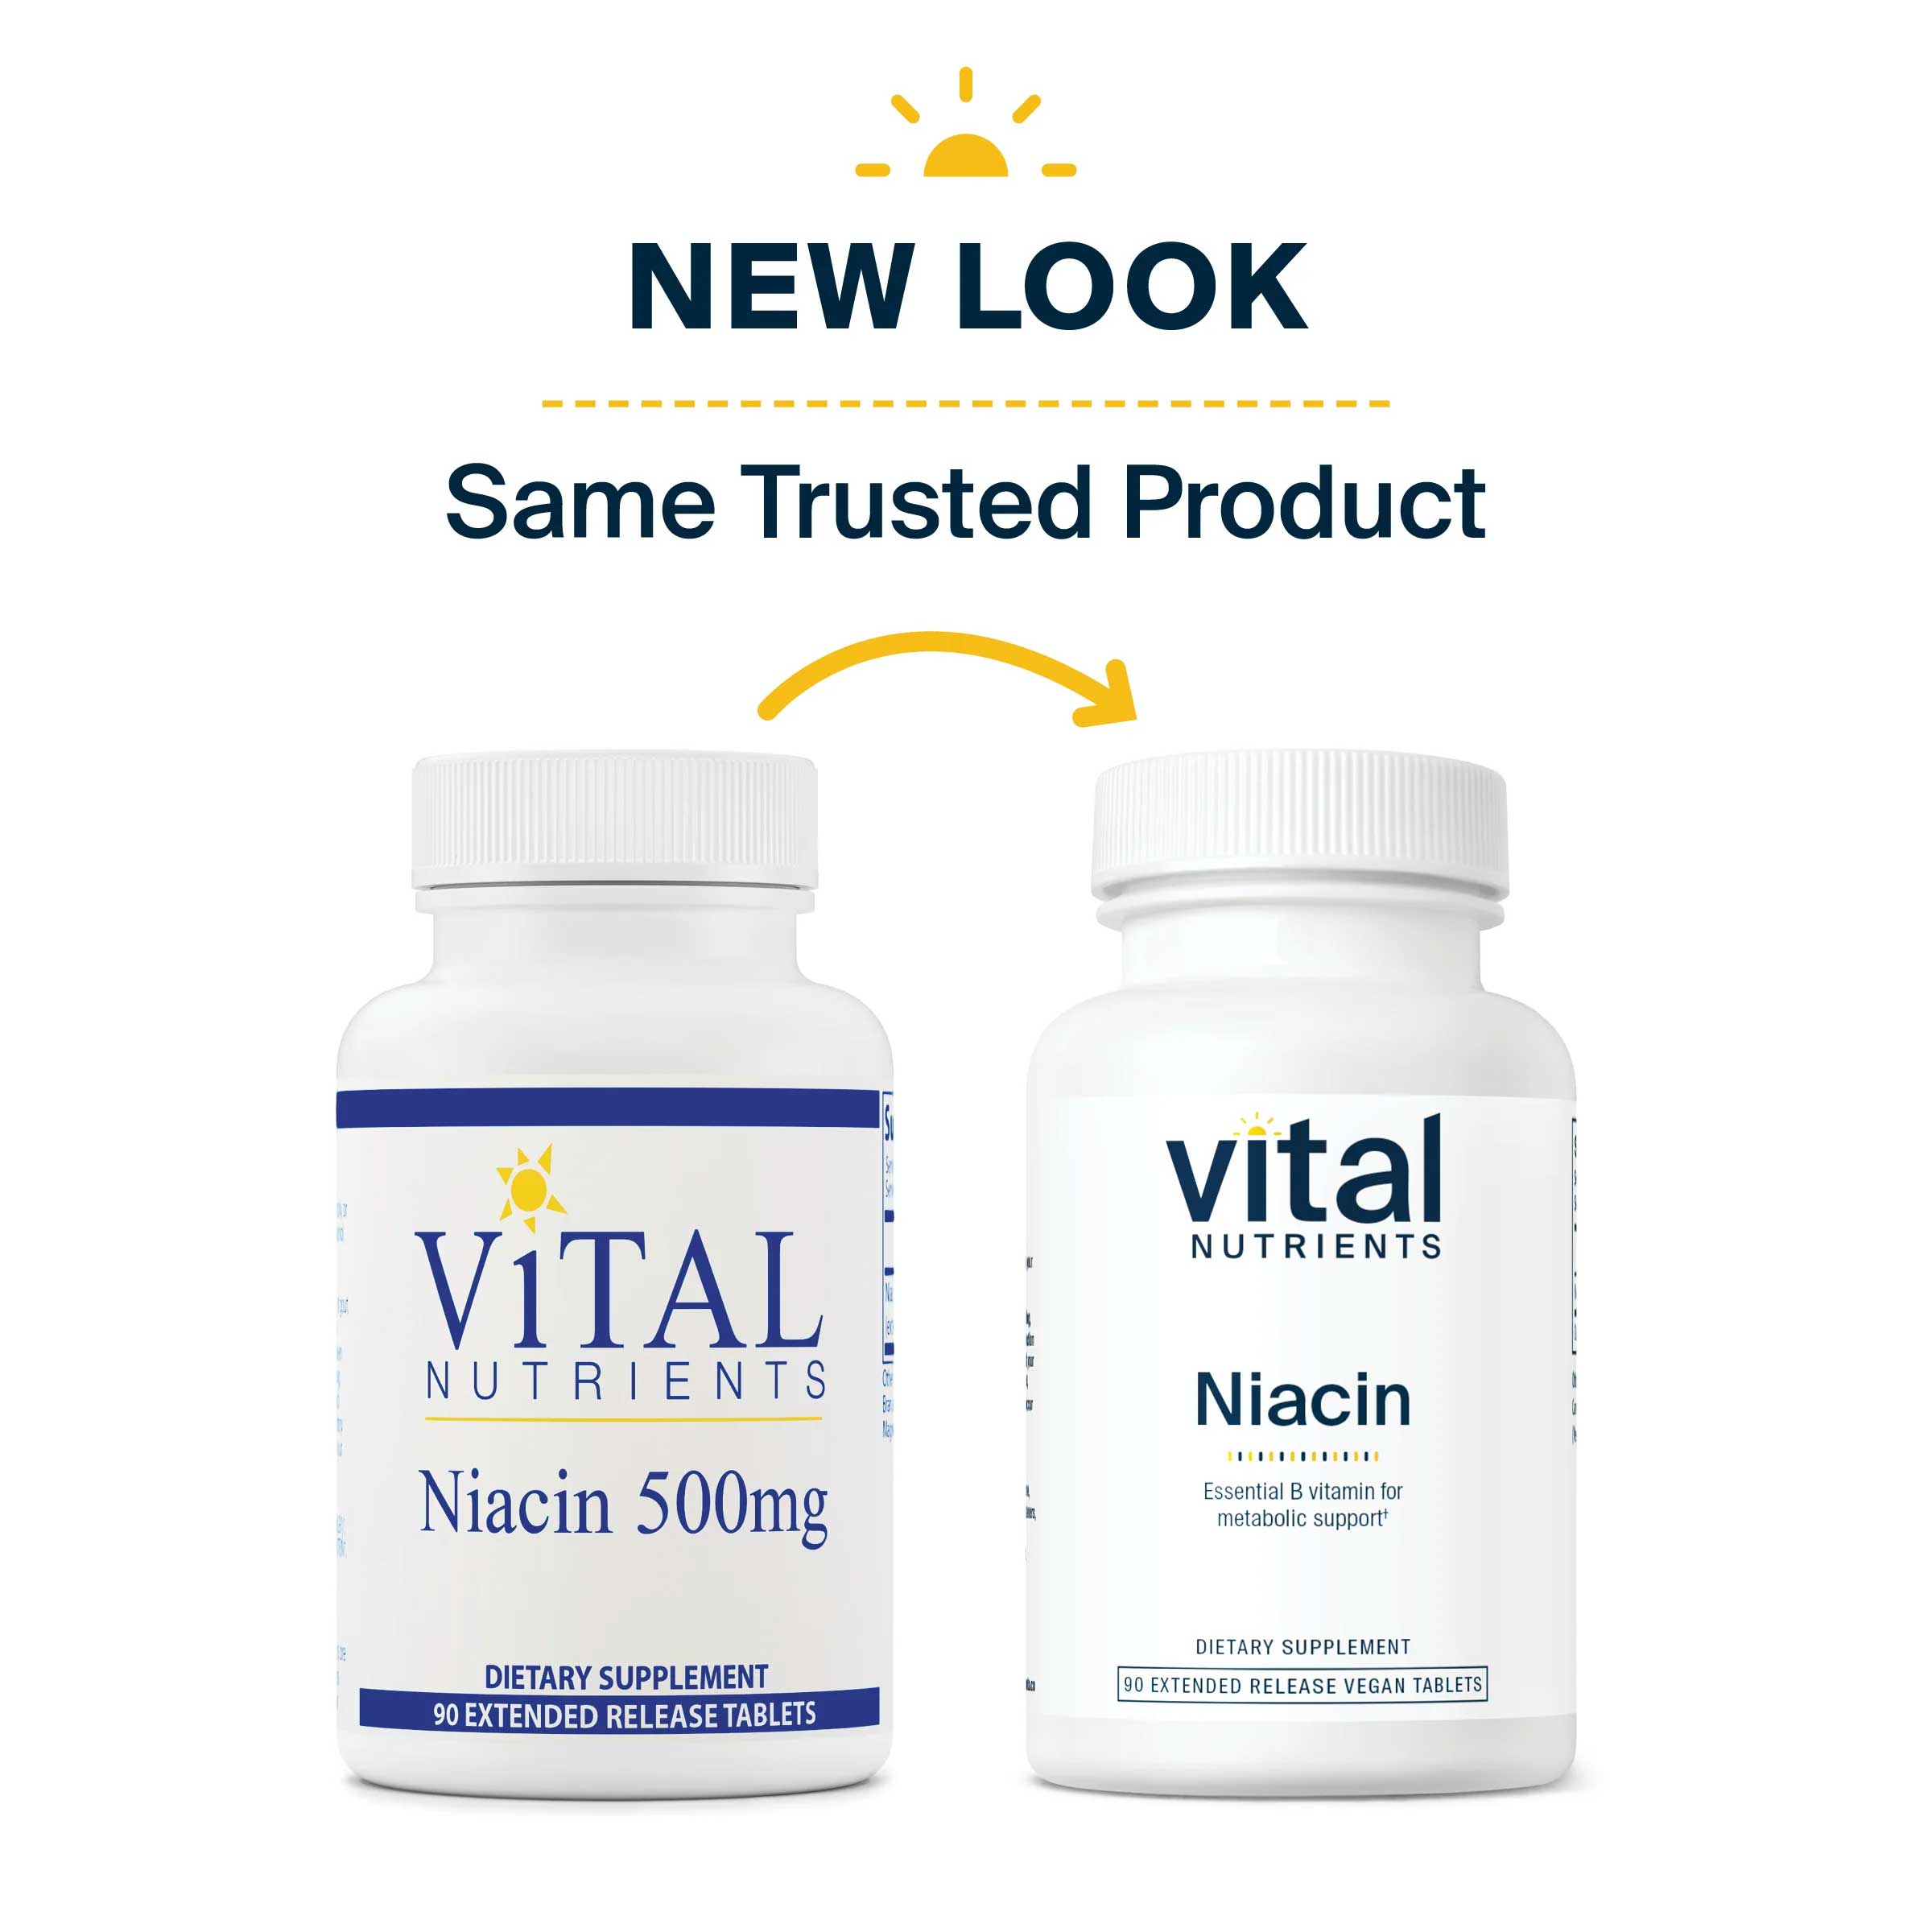 Vital Nutrients Niacin 500mg New Look